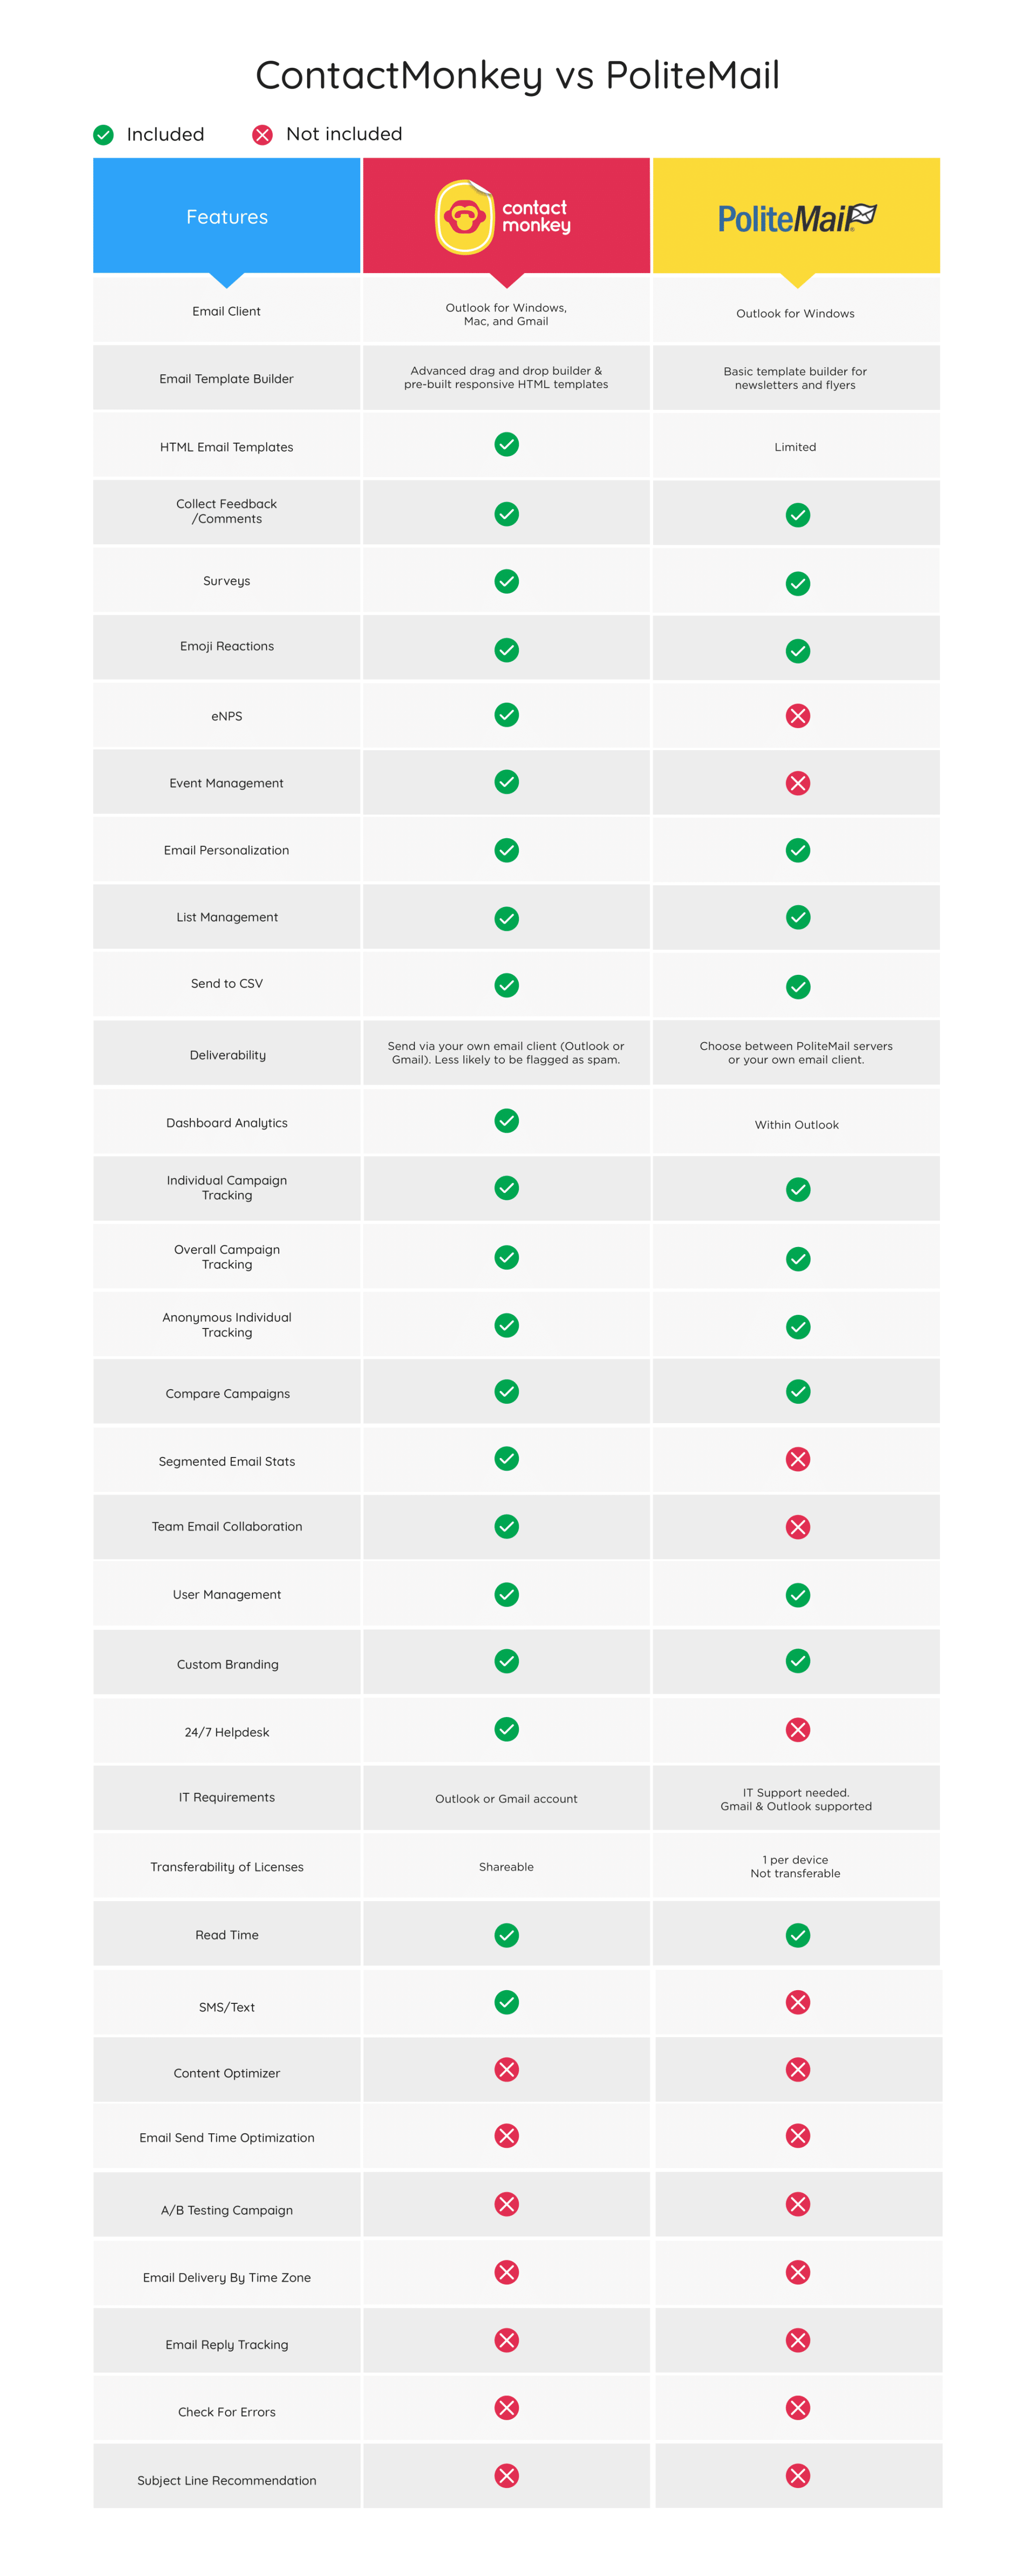 Image of ContactMonkey vs PoliteMail comparison chart.